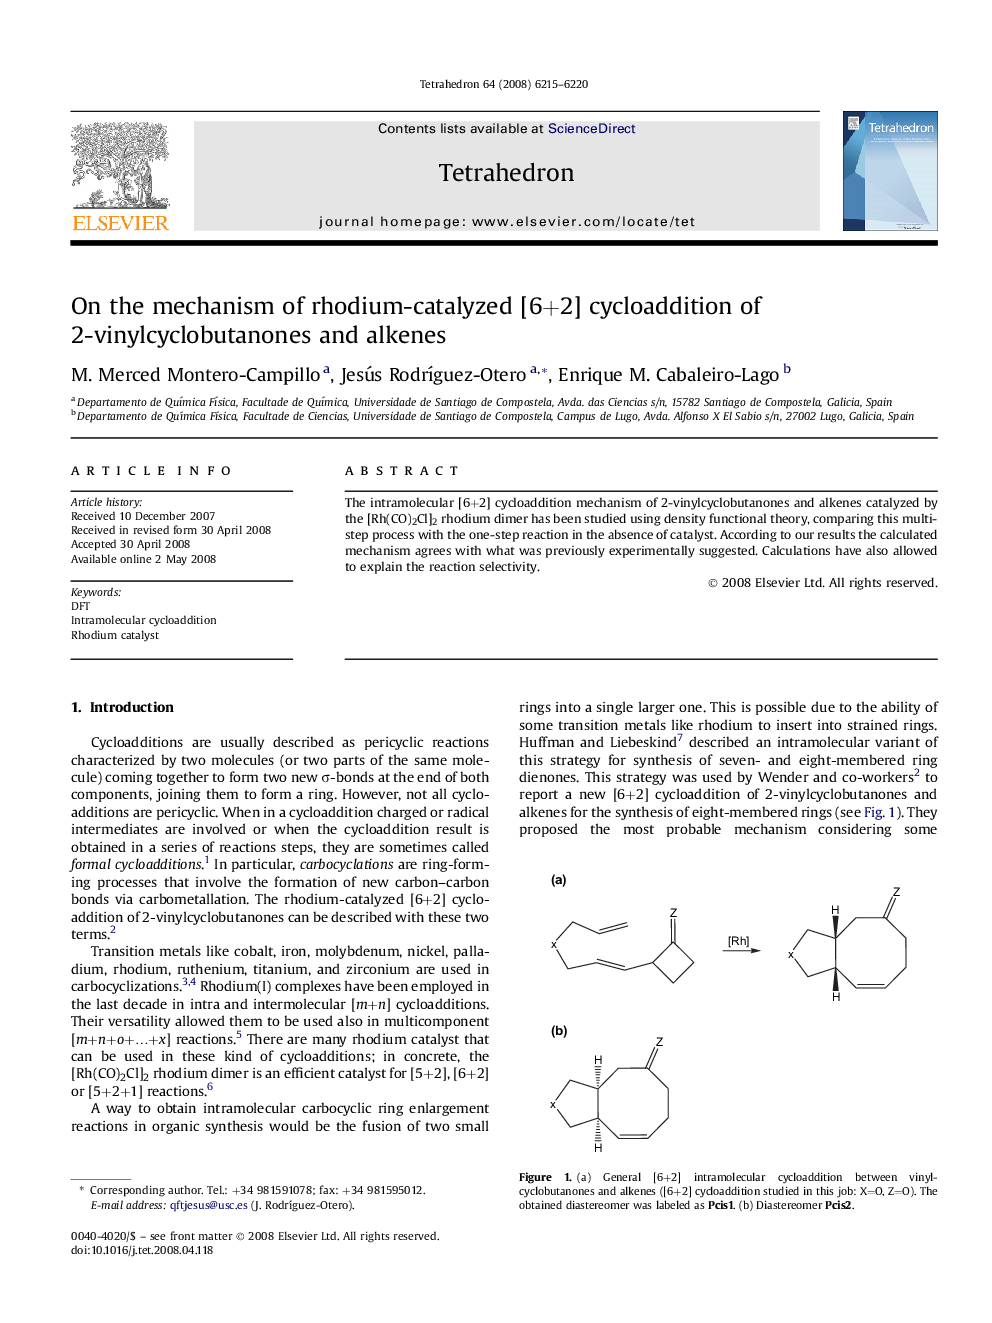 On the mechanism of rhodium-catalyzed [6+2] cycloaddition of 2-vinylcyclobutanones and alkenes